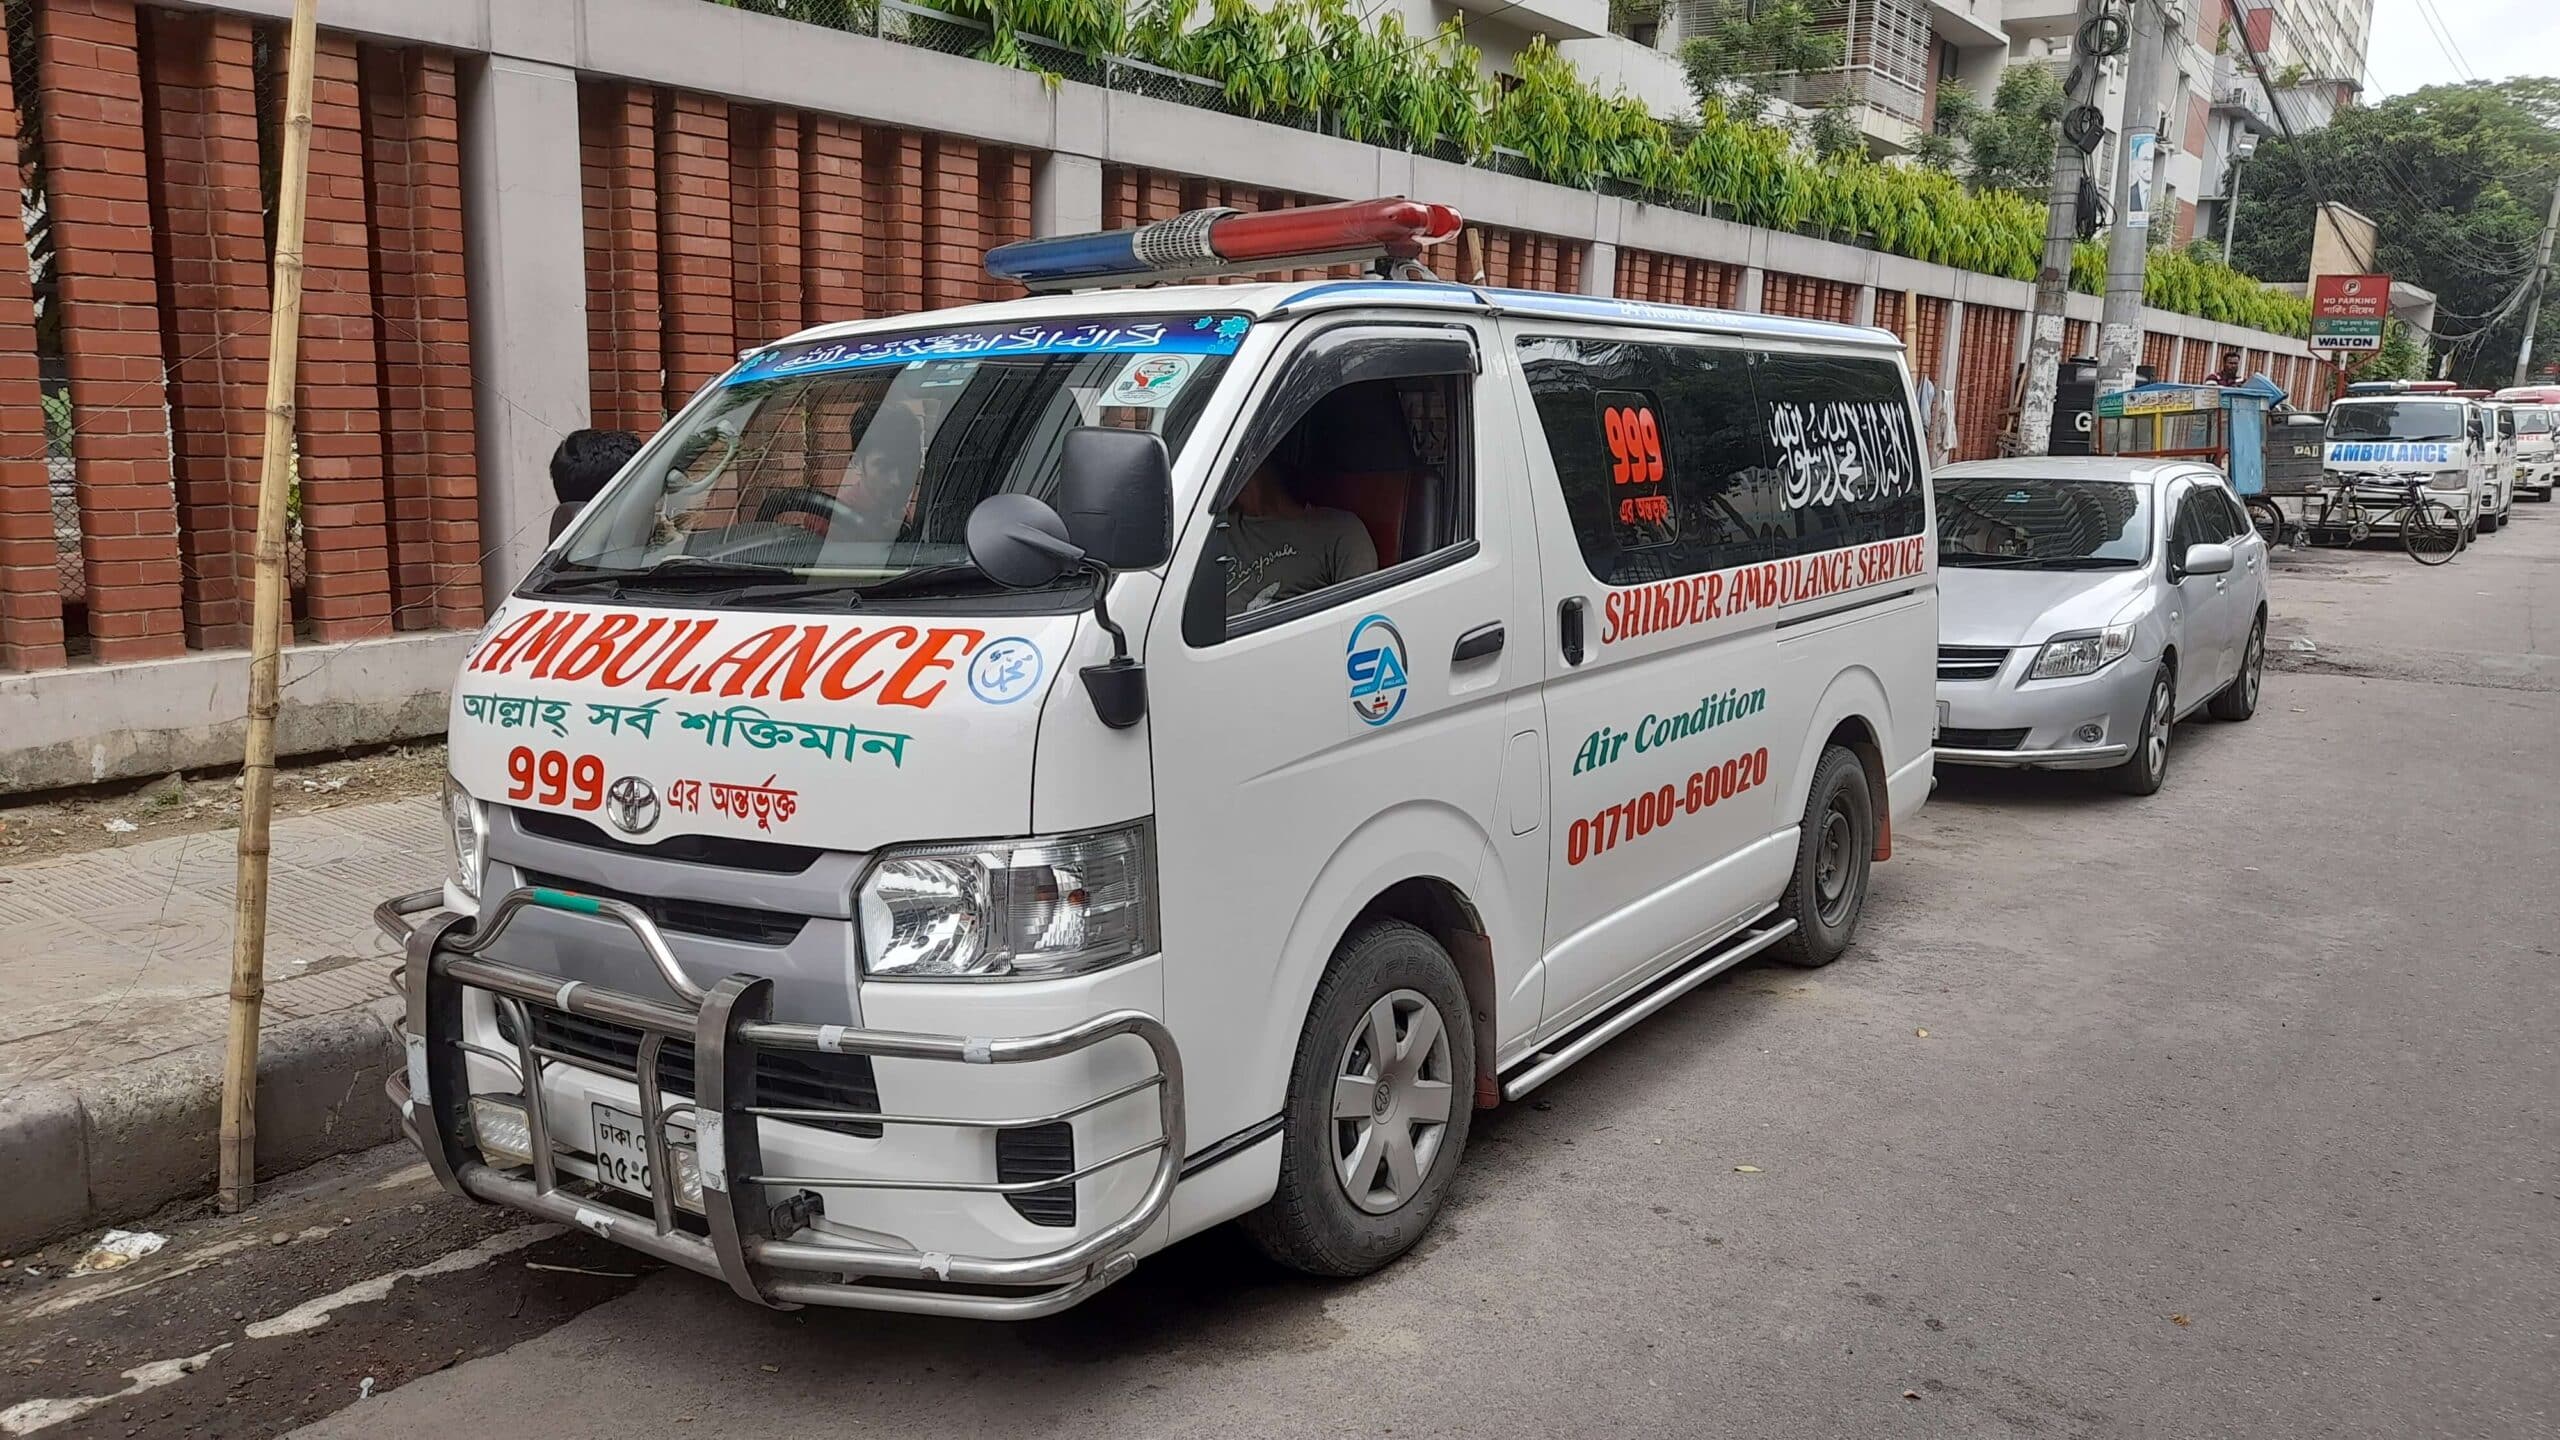 sadarpur-ambulance-service-24ambulance